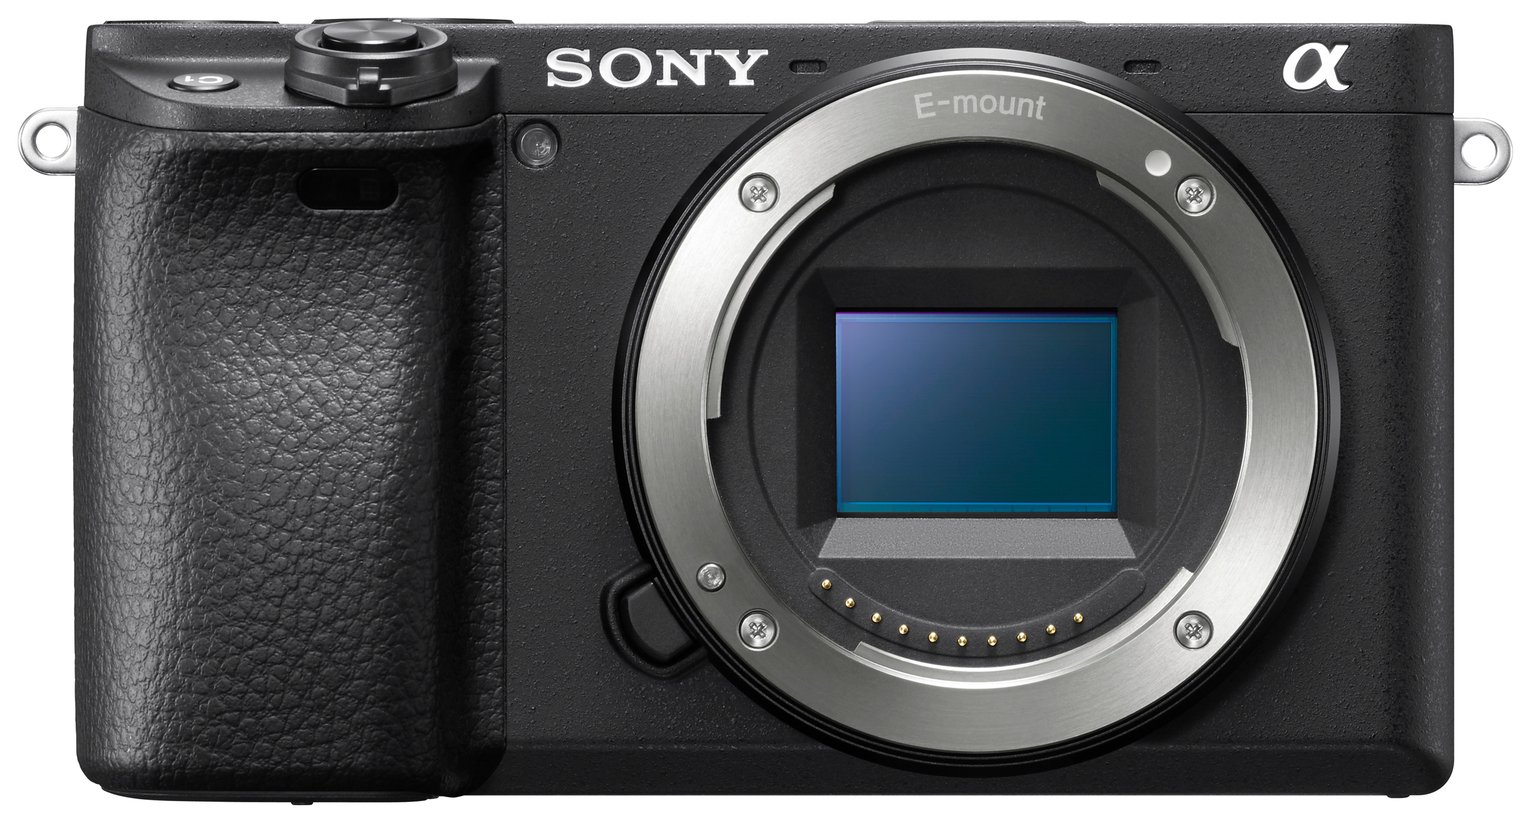 Sony 6400 E Mount Camera Body Review